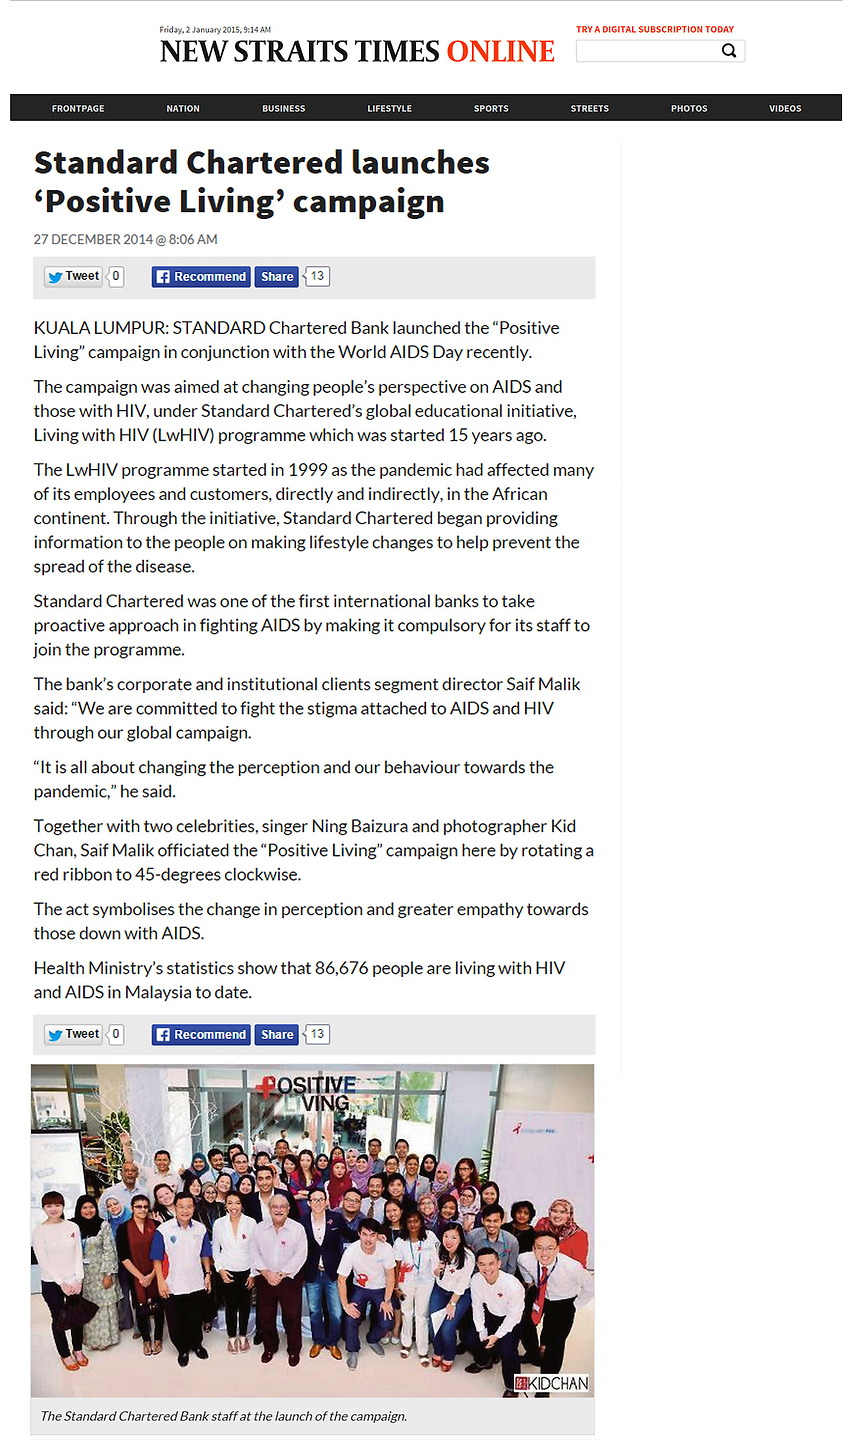 New Straits Times: Kid Chan & Standard Chartered